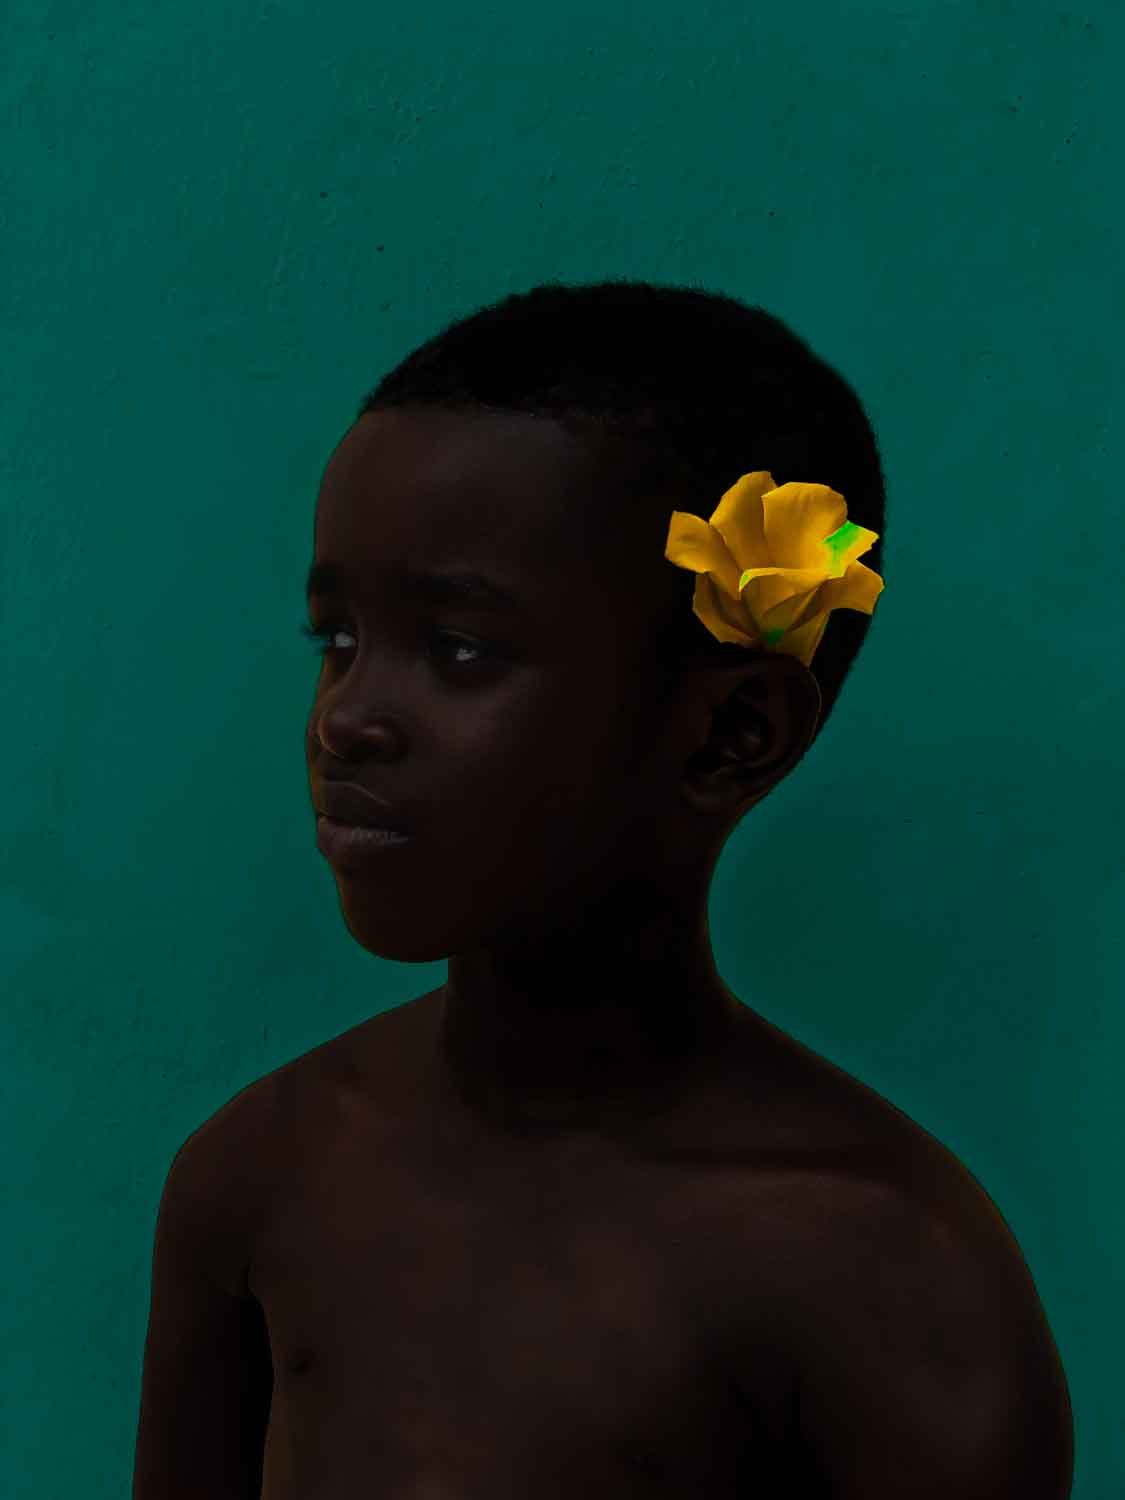 IDEAT Magazin Sarfo Emmanuel Annor Gods Child 2022 Photography 50 x 70 cm 10 3 AP. Courtesy of The Bridge Gallery